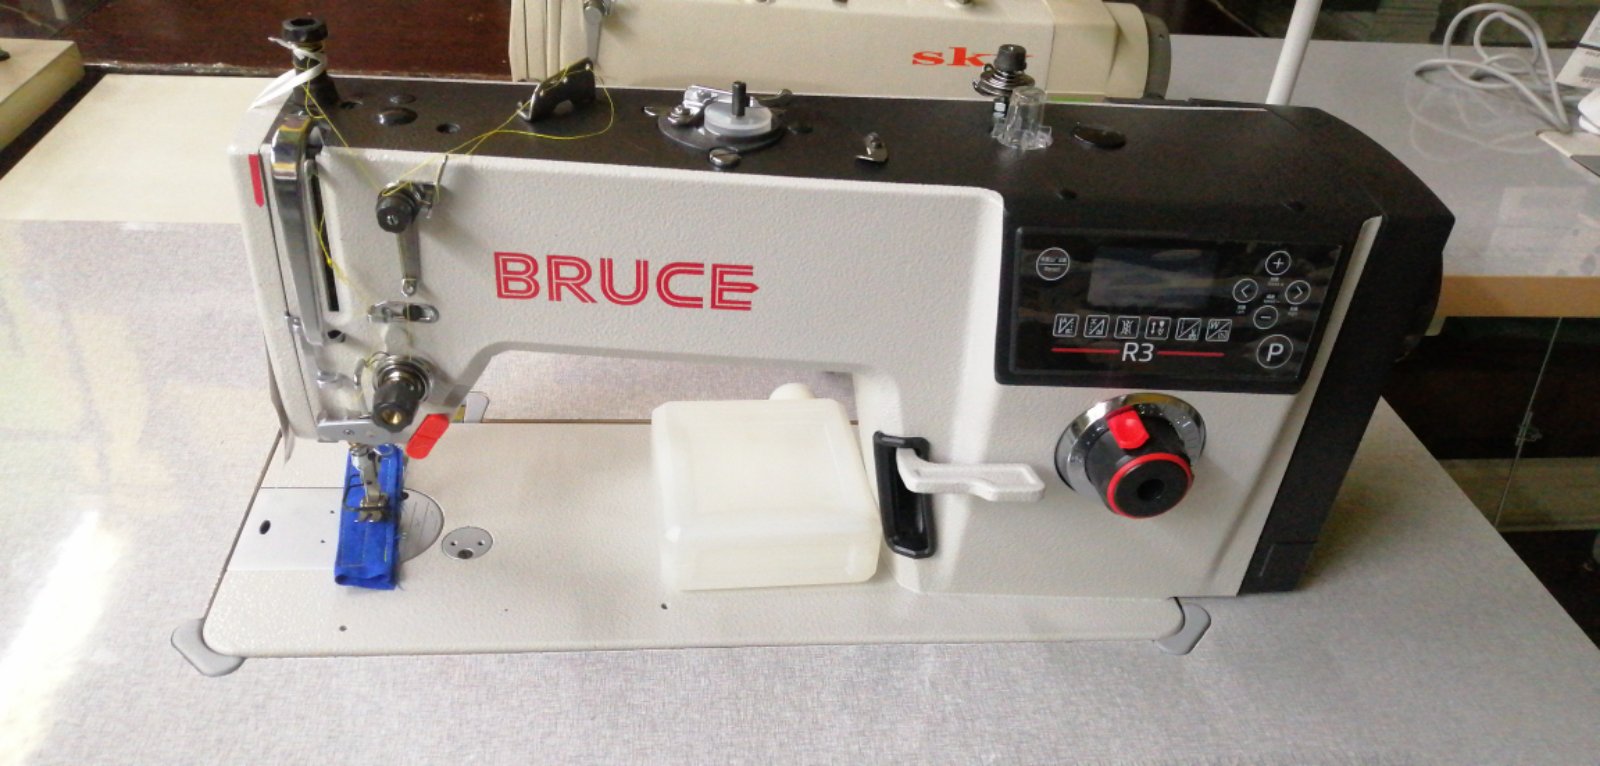 New Bruce Hi Speed Automatik Direct Drive Motor Auto cut sewing machine 